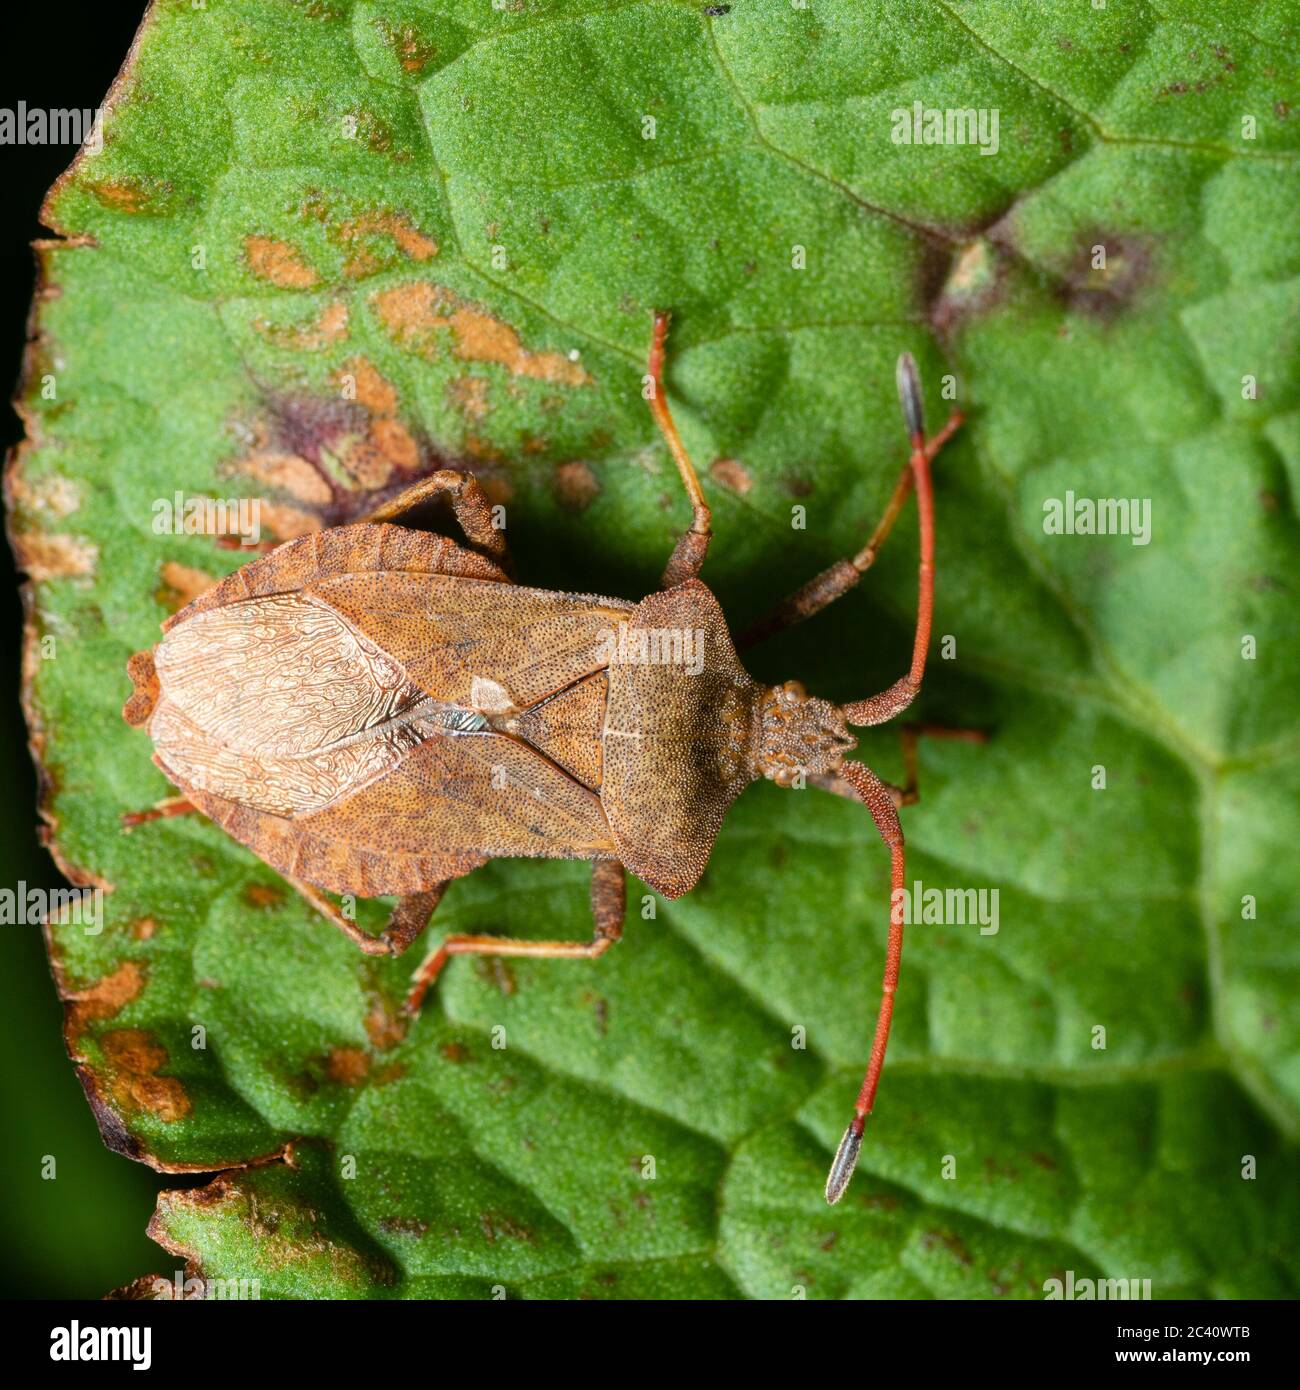 Adult of the UK hemipteran dock bug, Coreus marginatus Stock Photo